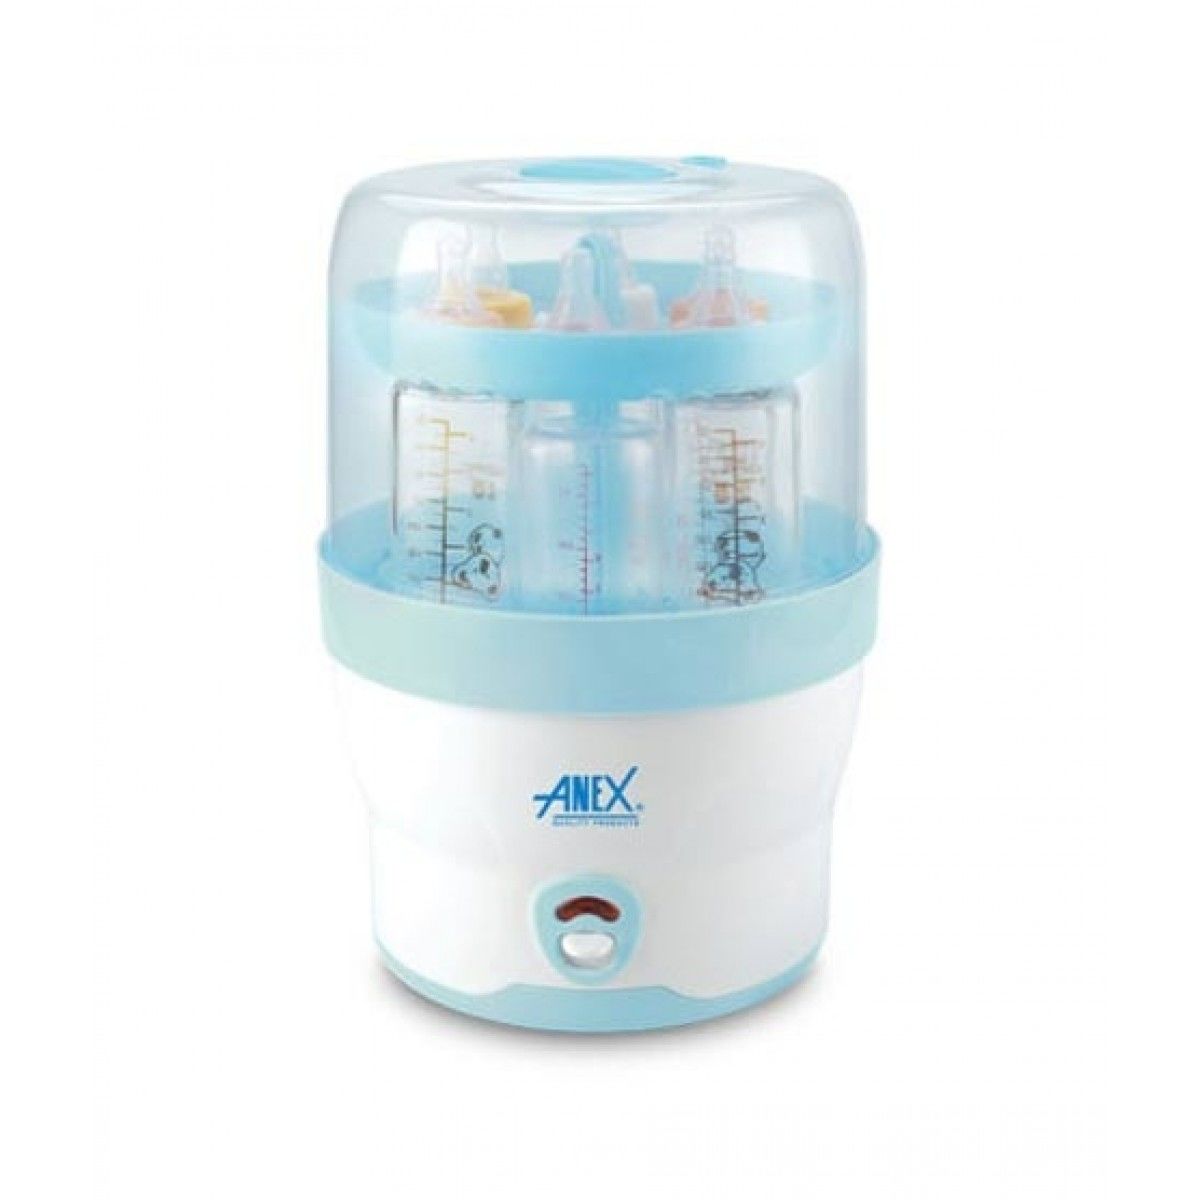 Anex Kitchen Appliances Baby Bottle Warmer - AG-736